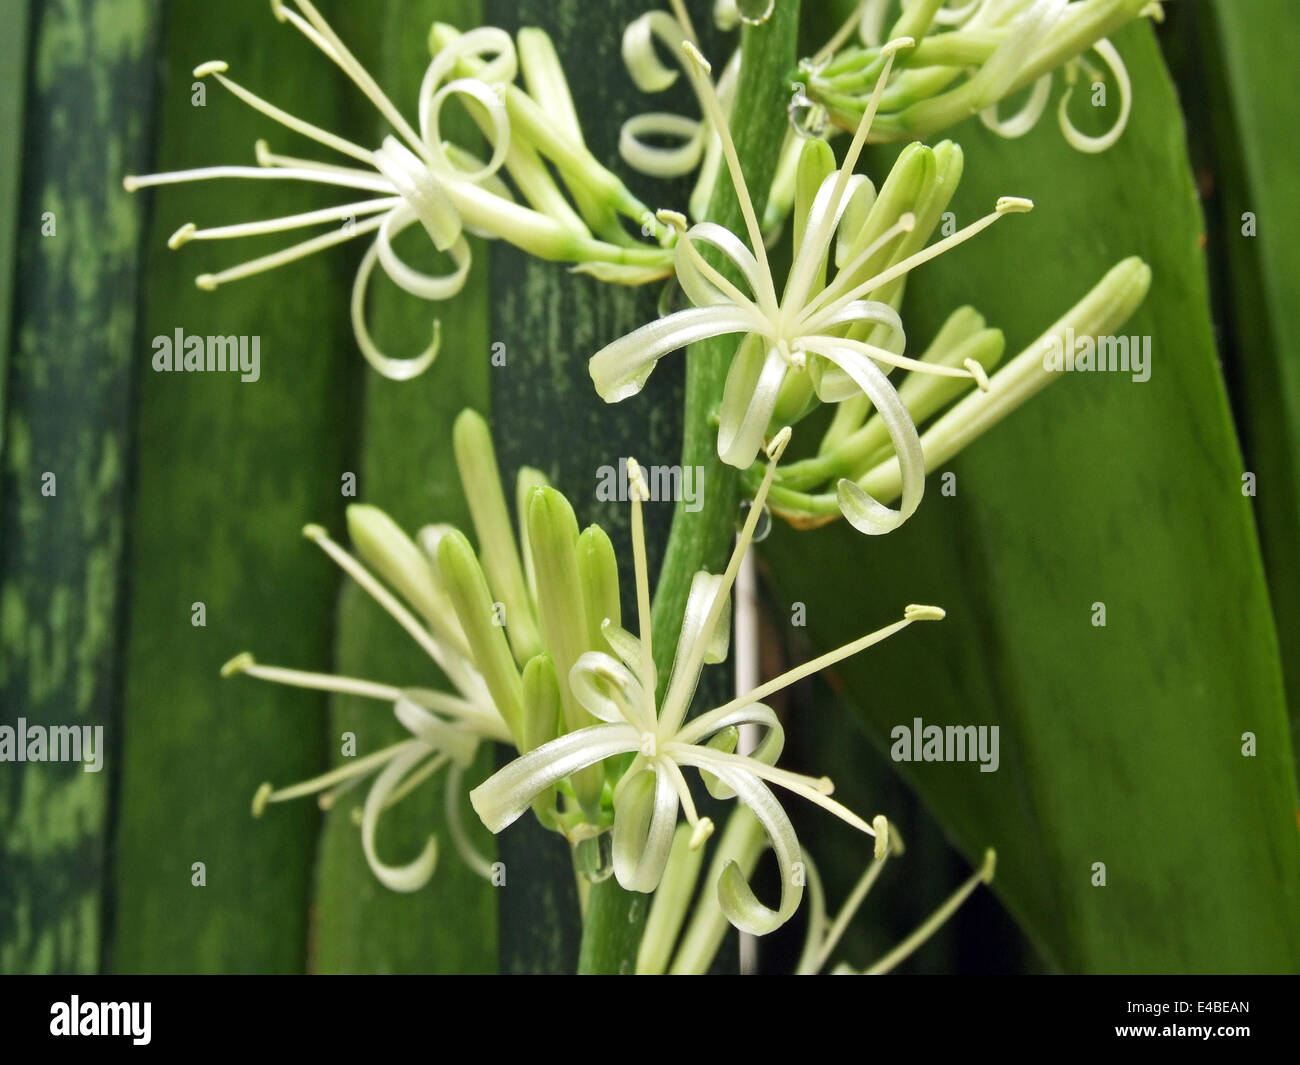 Bowstring hemp (Sansevieria) Stock Photo